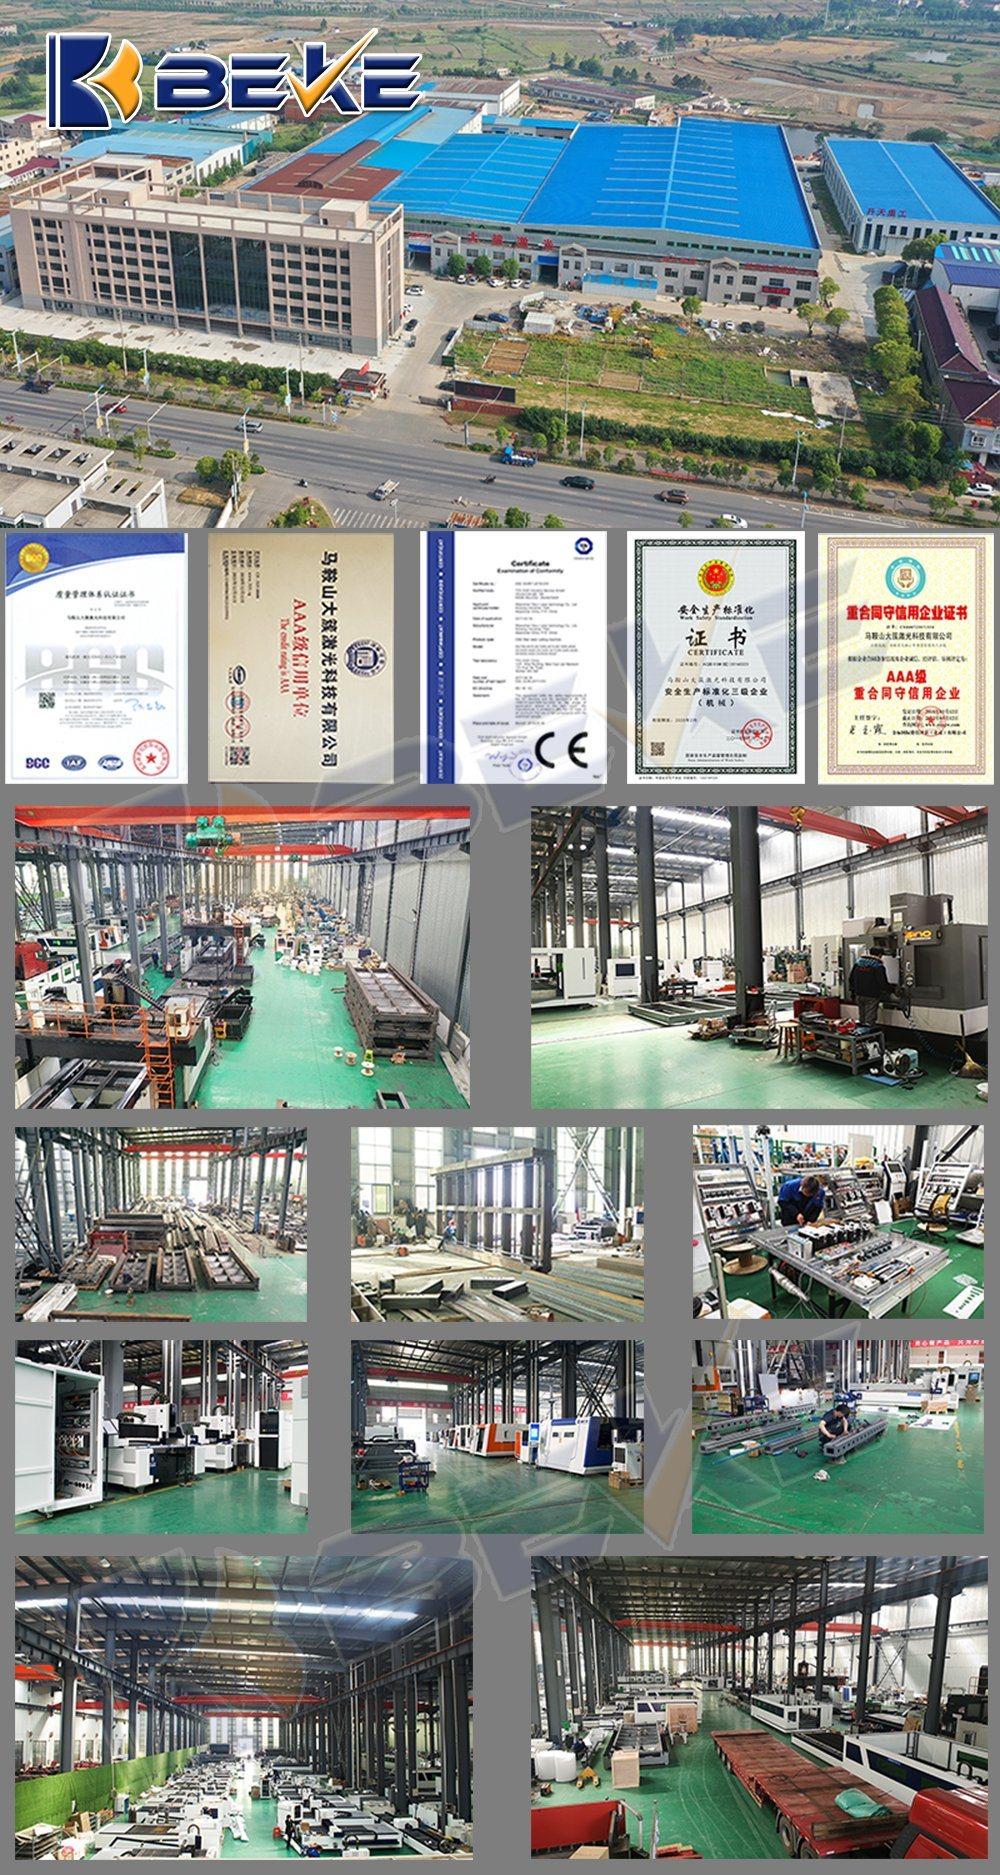 Nanjing Beke Hot Sales 1500W Square Pipe CNC Laser Cutting Machine